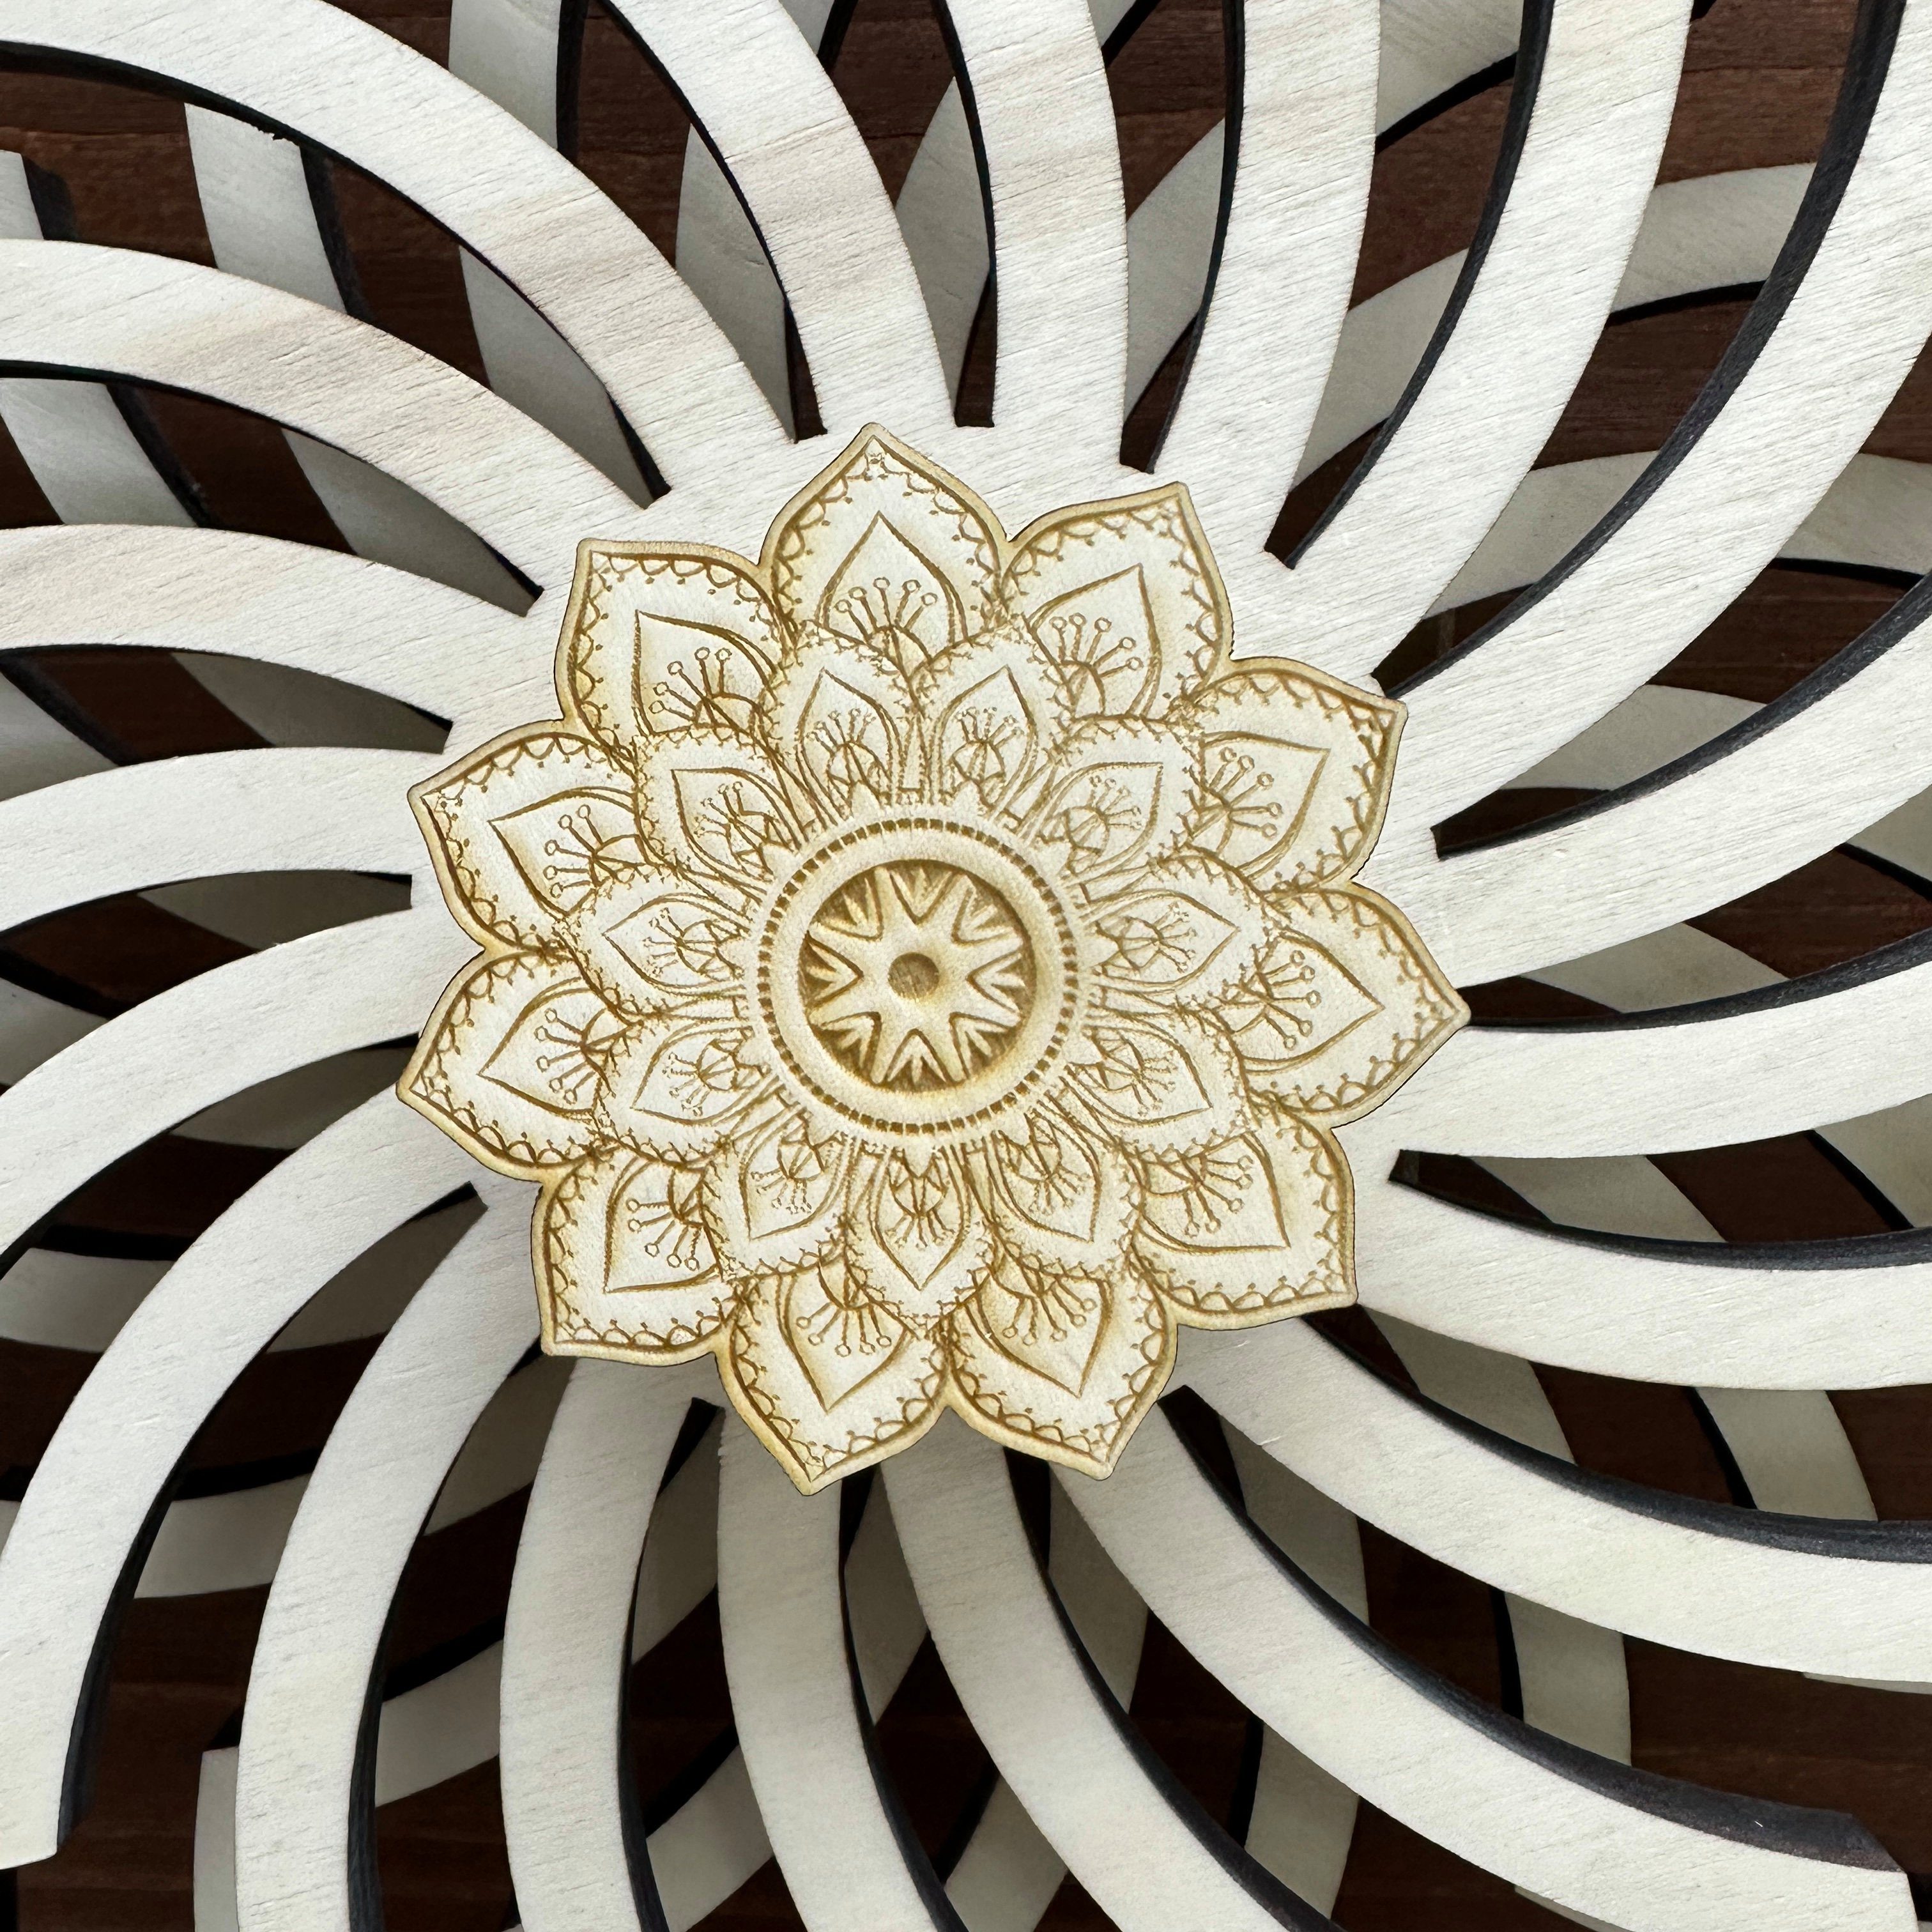 WoodFriends Wandbild Mandala 3D Yoga, 36 cm Illusion Meditation beweglich aus Holz, Wandkunst Esoterik